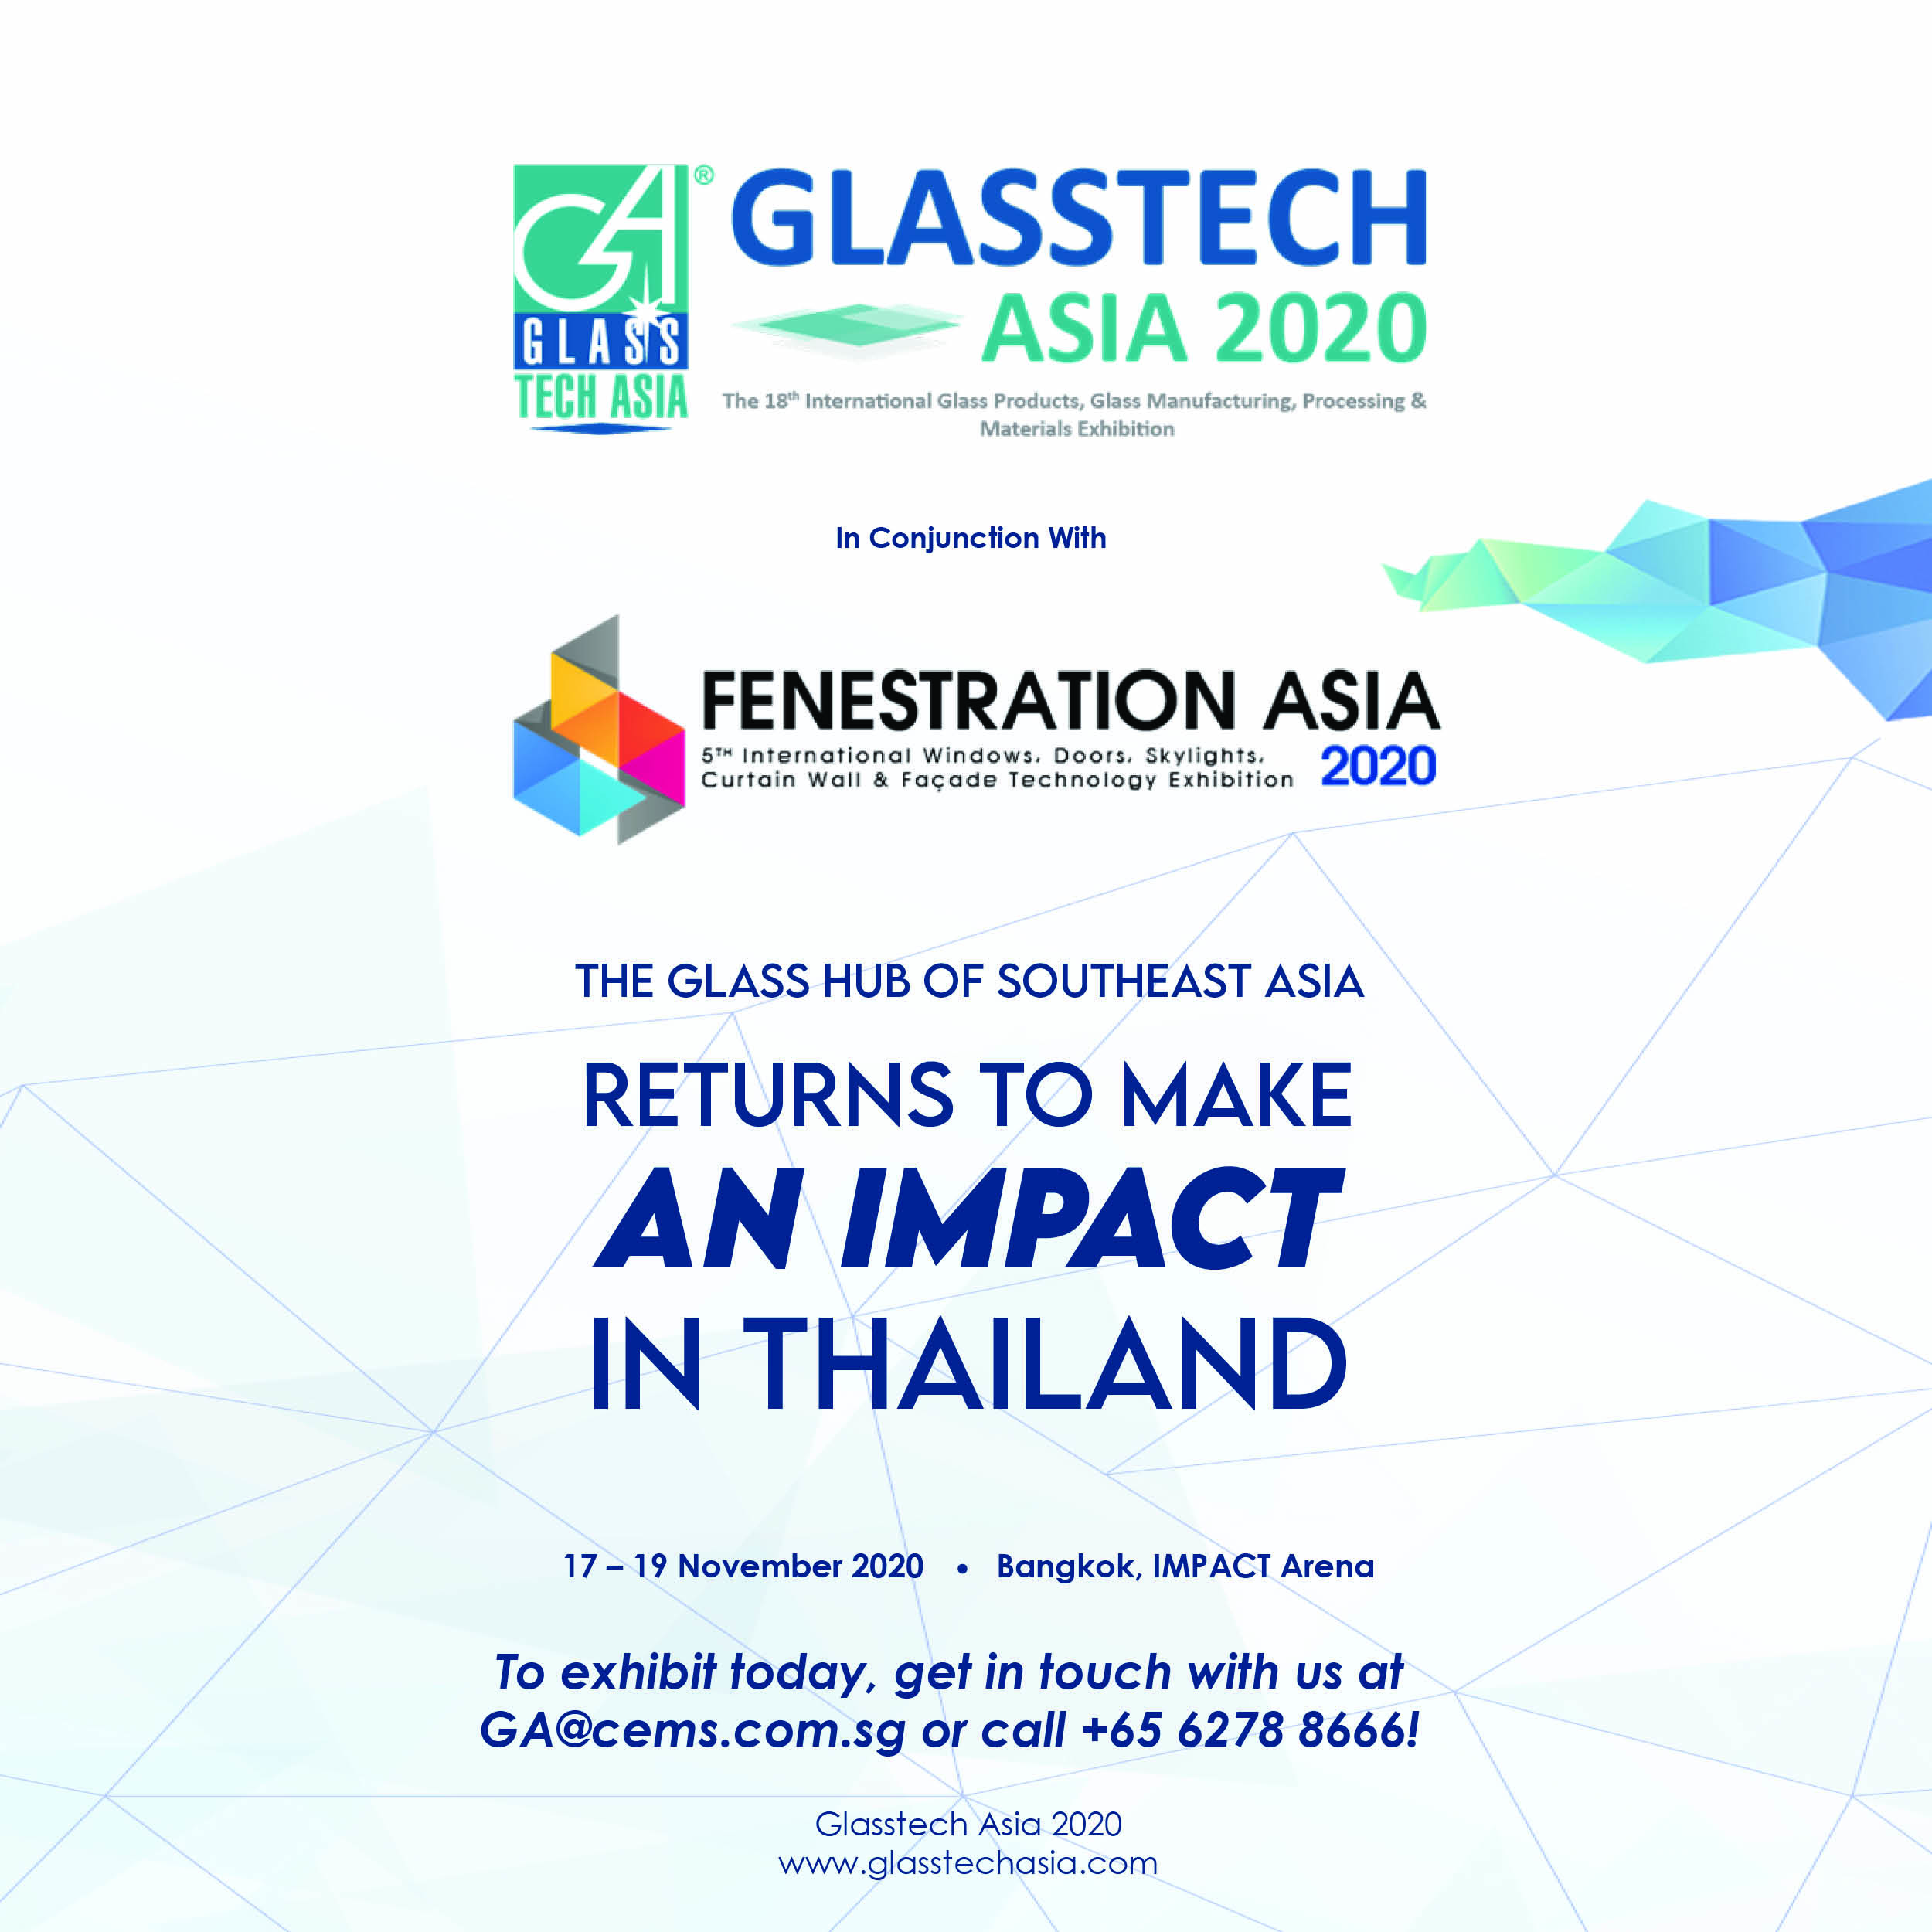 Glasstech Asia 2020, Bangkok, Thailand